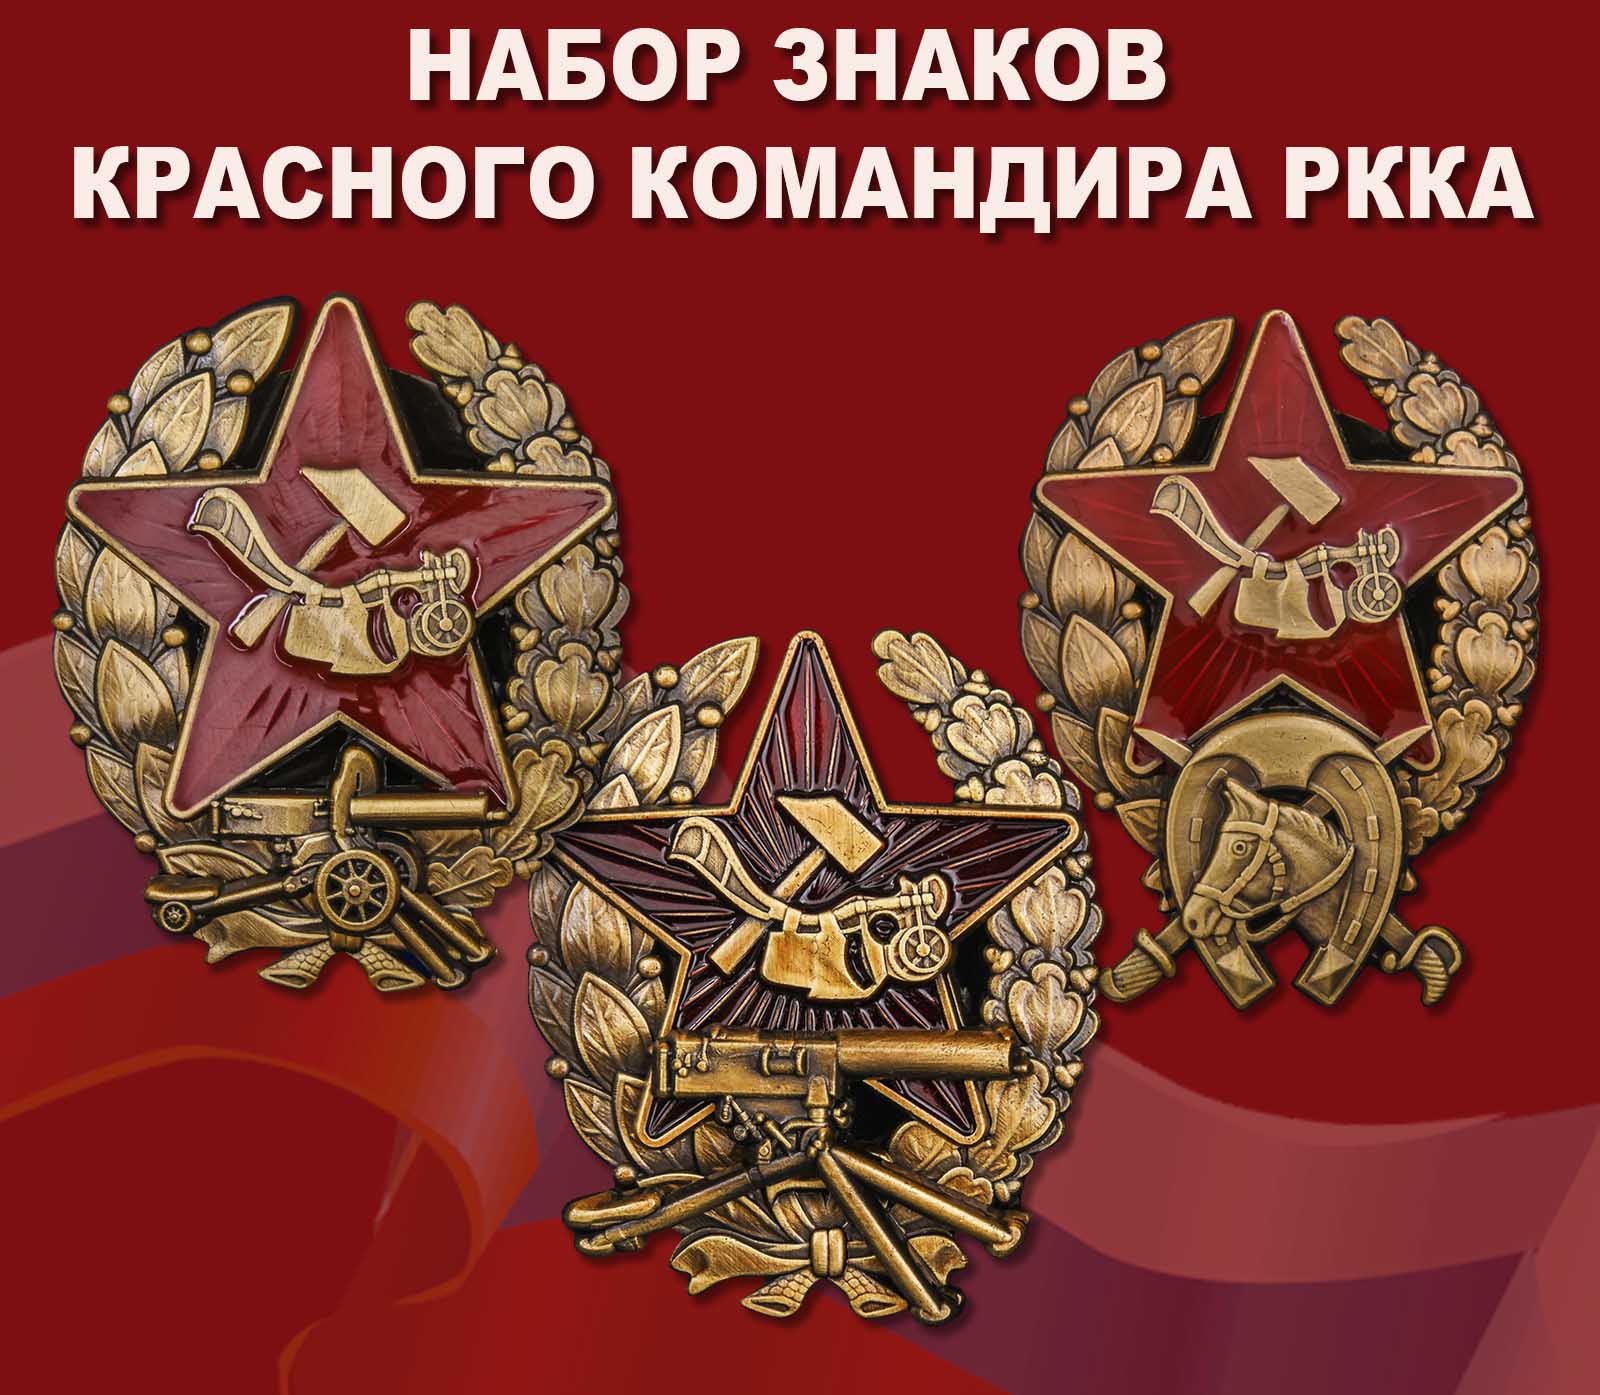 Купить набор знаков Красного командира РККА (1918-1922)